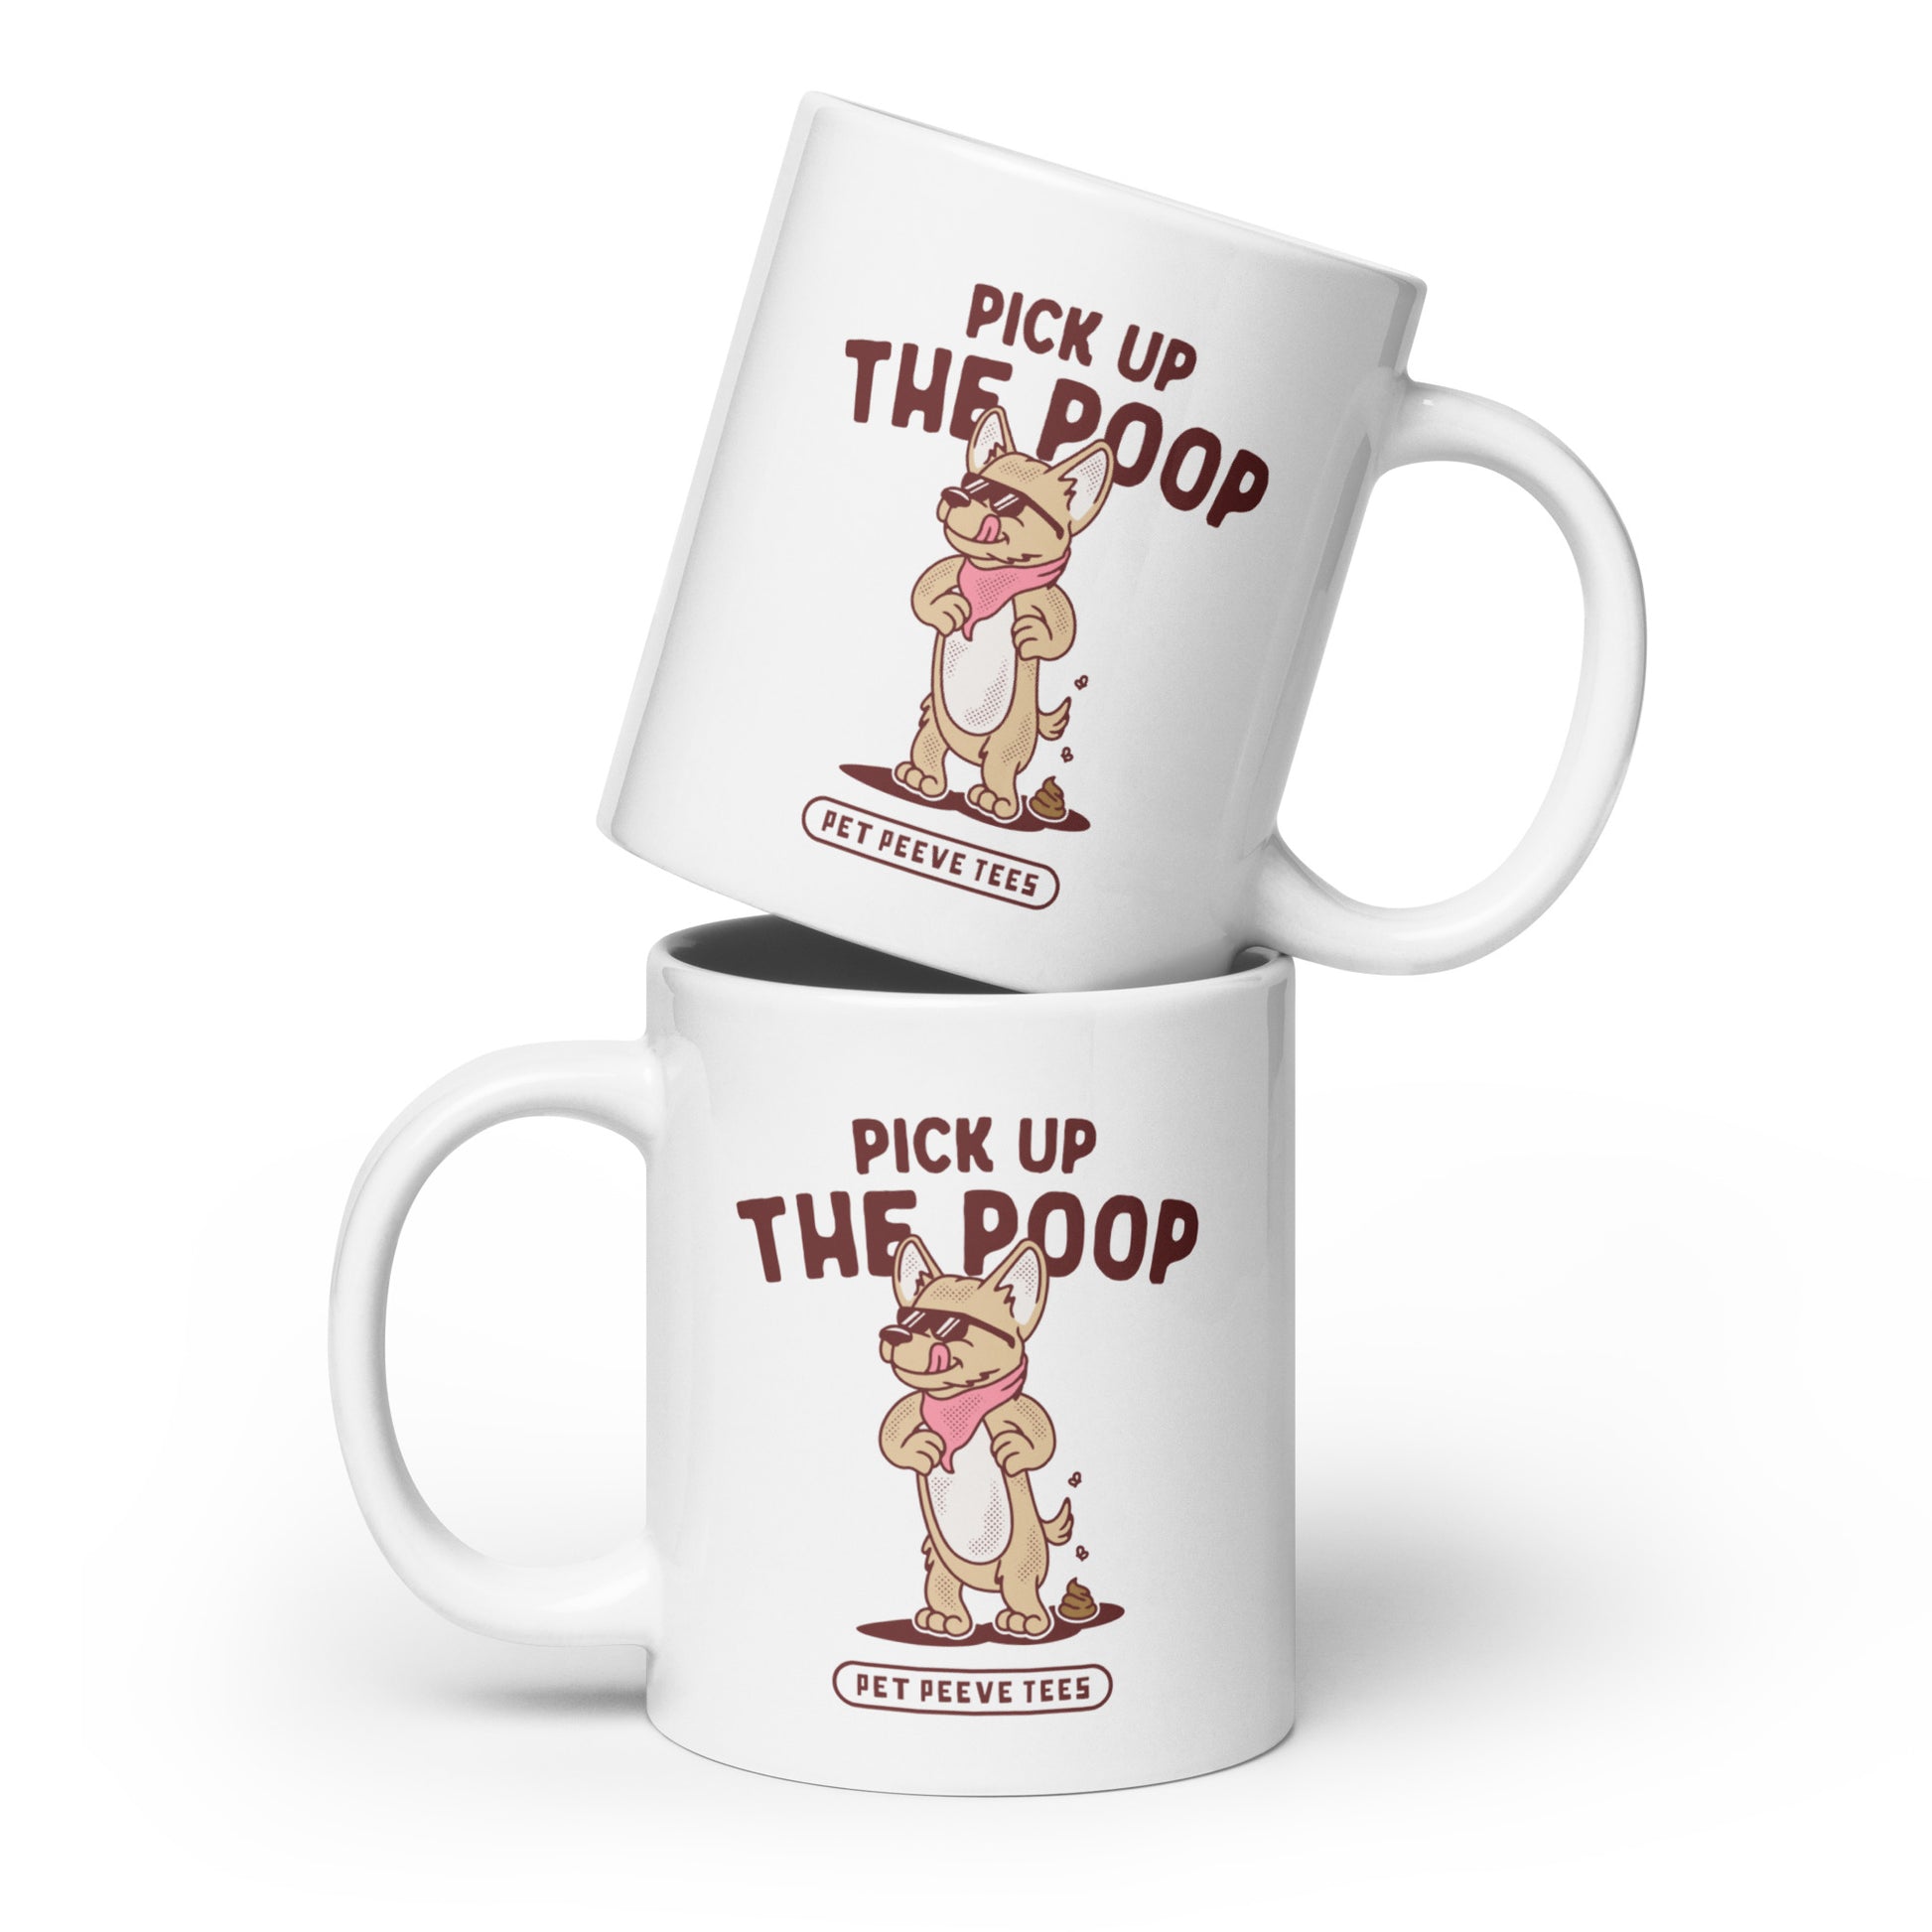 Pick Up The Poop - Pet Peeve Tee - White Mug